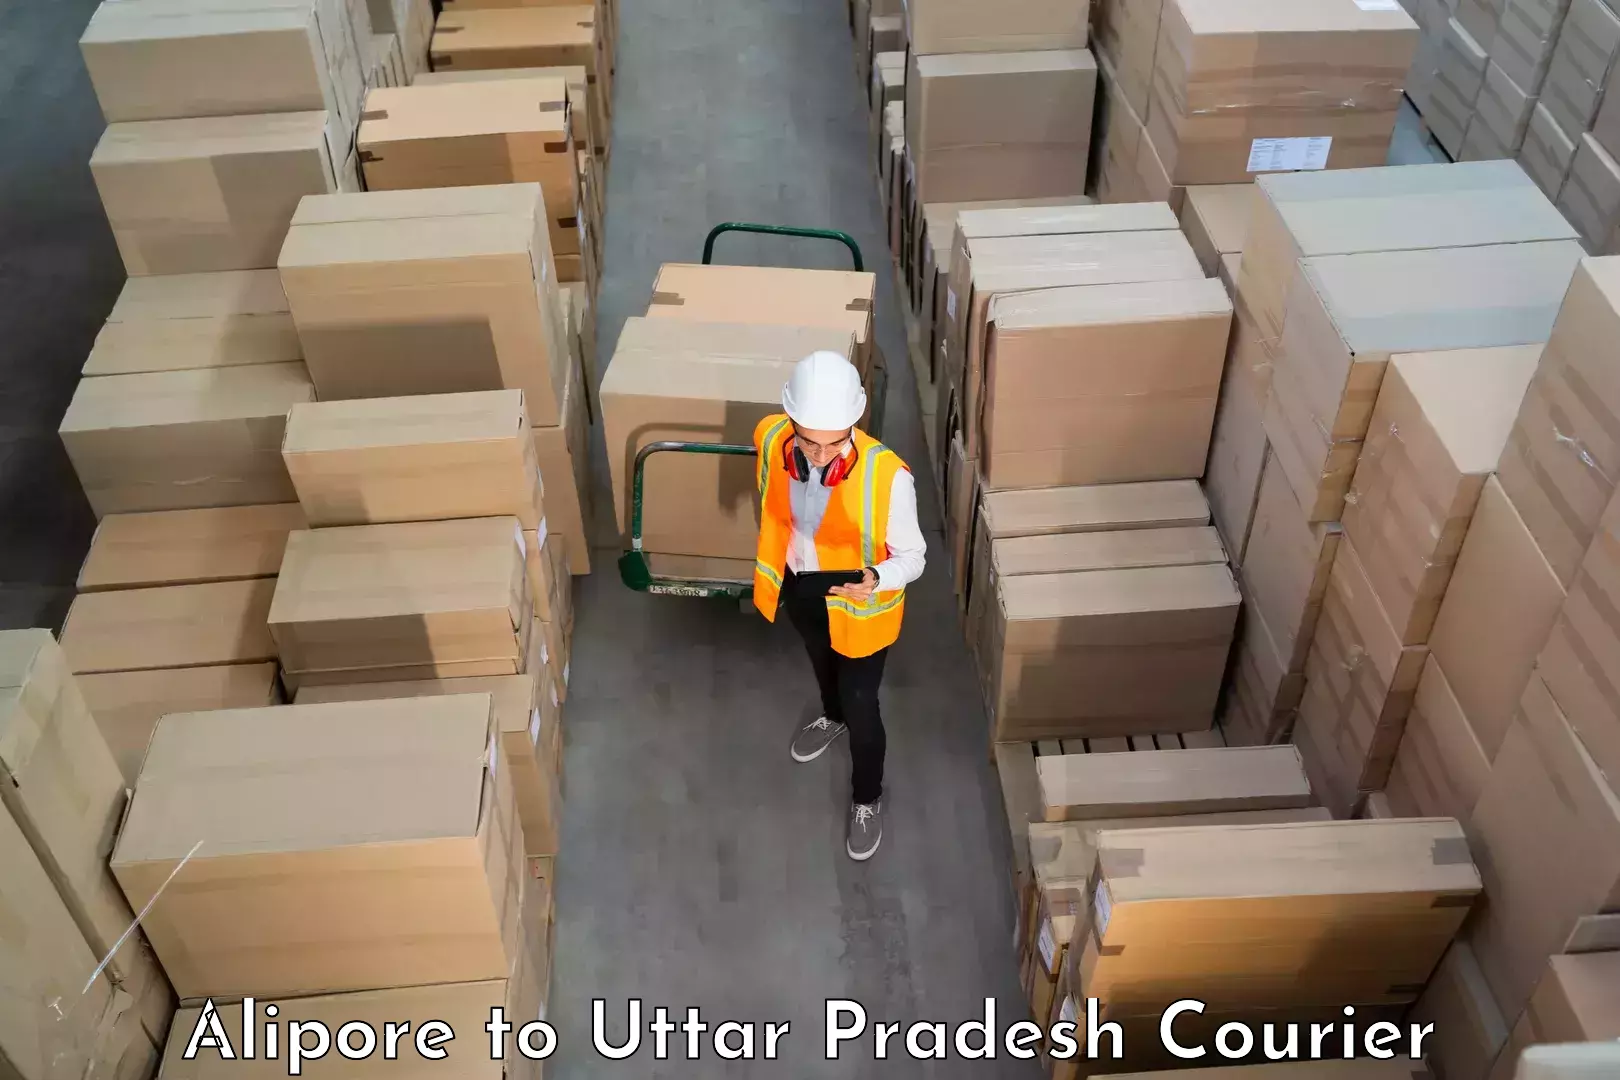 Professional furniture movers in Alipore to Rudhauli